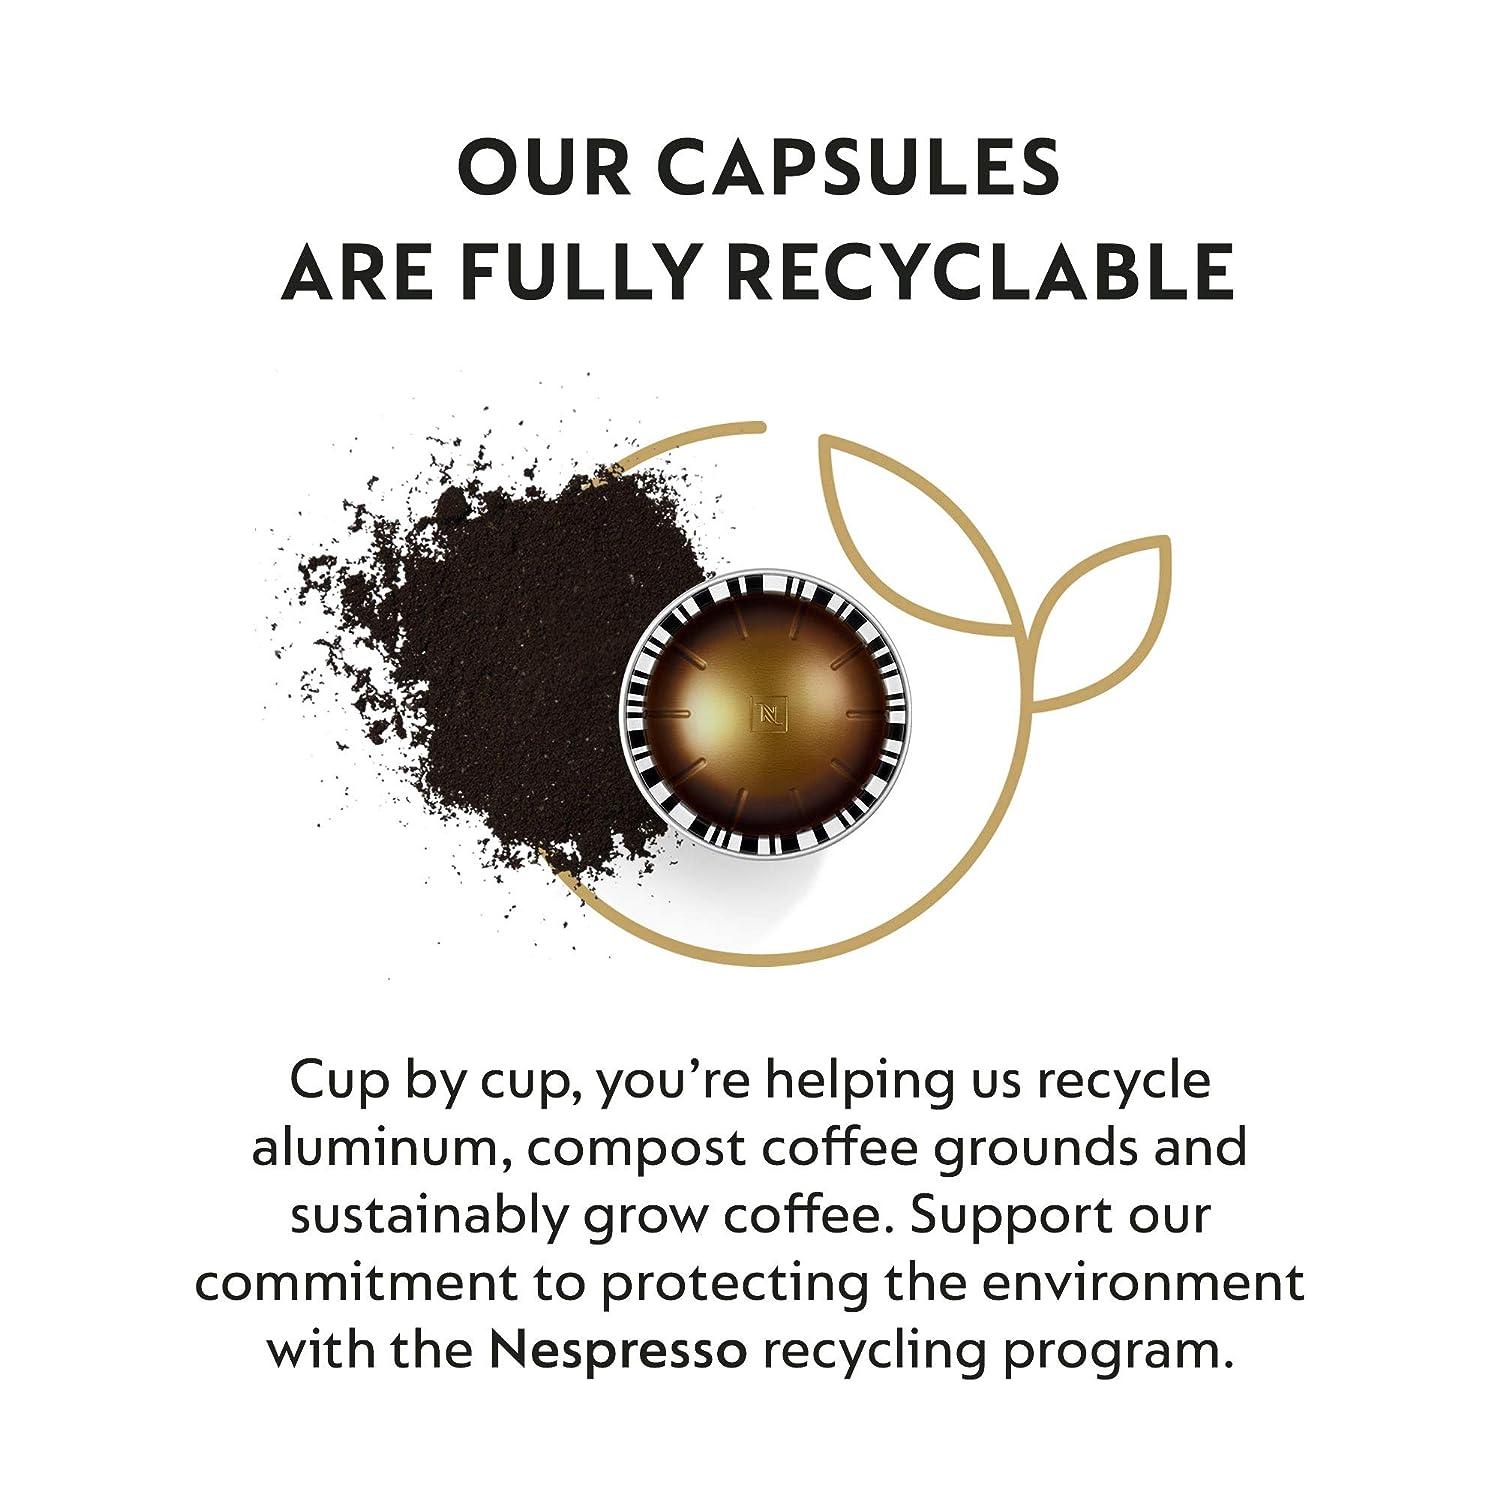 Nespresso Vertuoline Double Espresso Dolce Capsule Pods- 10 Pods in Sleeve